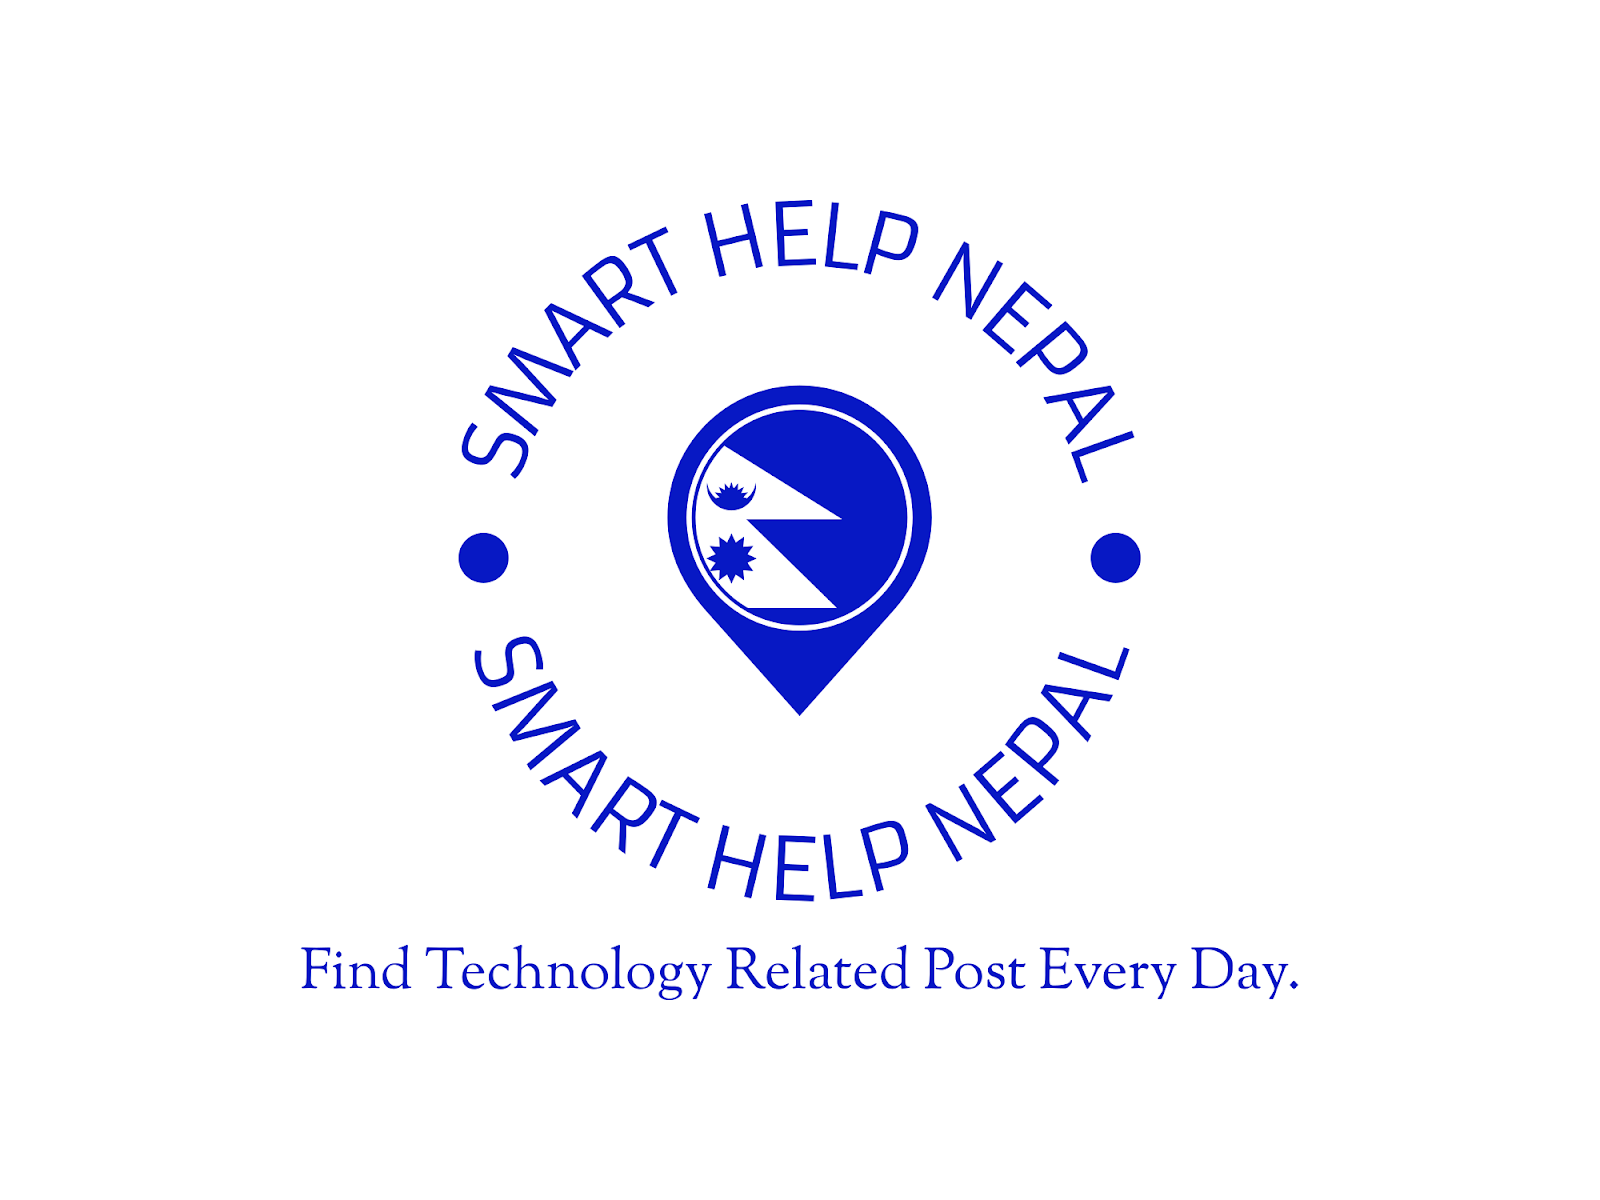 SMART HELP NEPAL